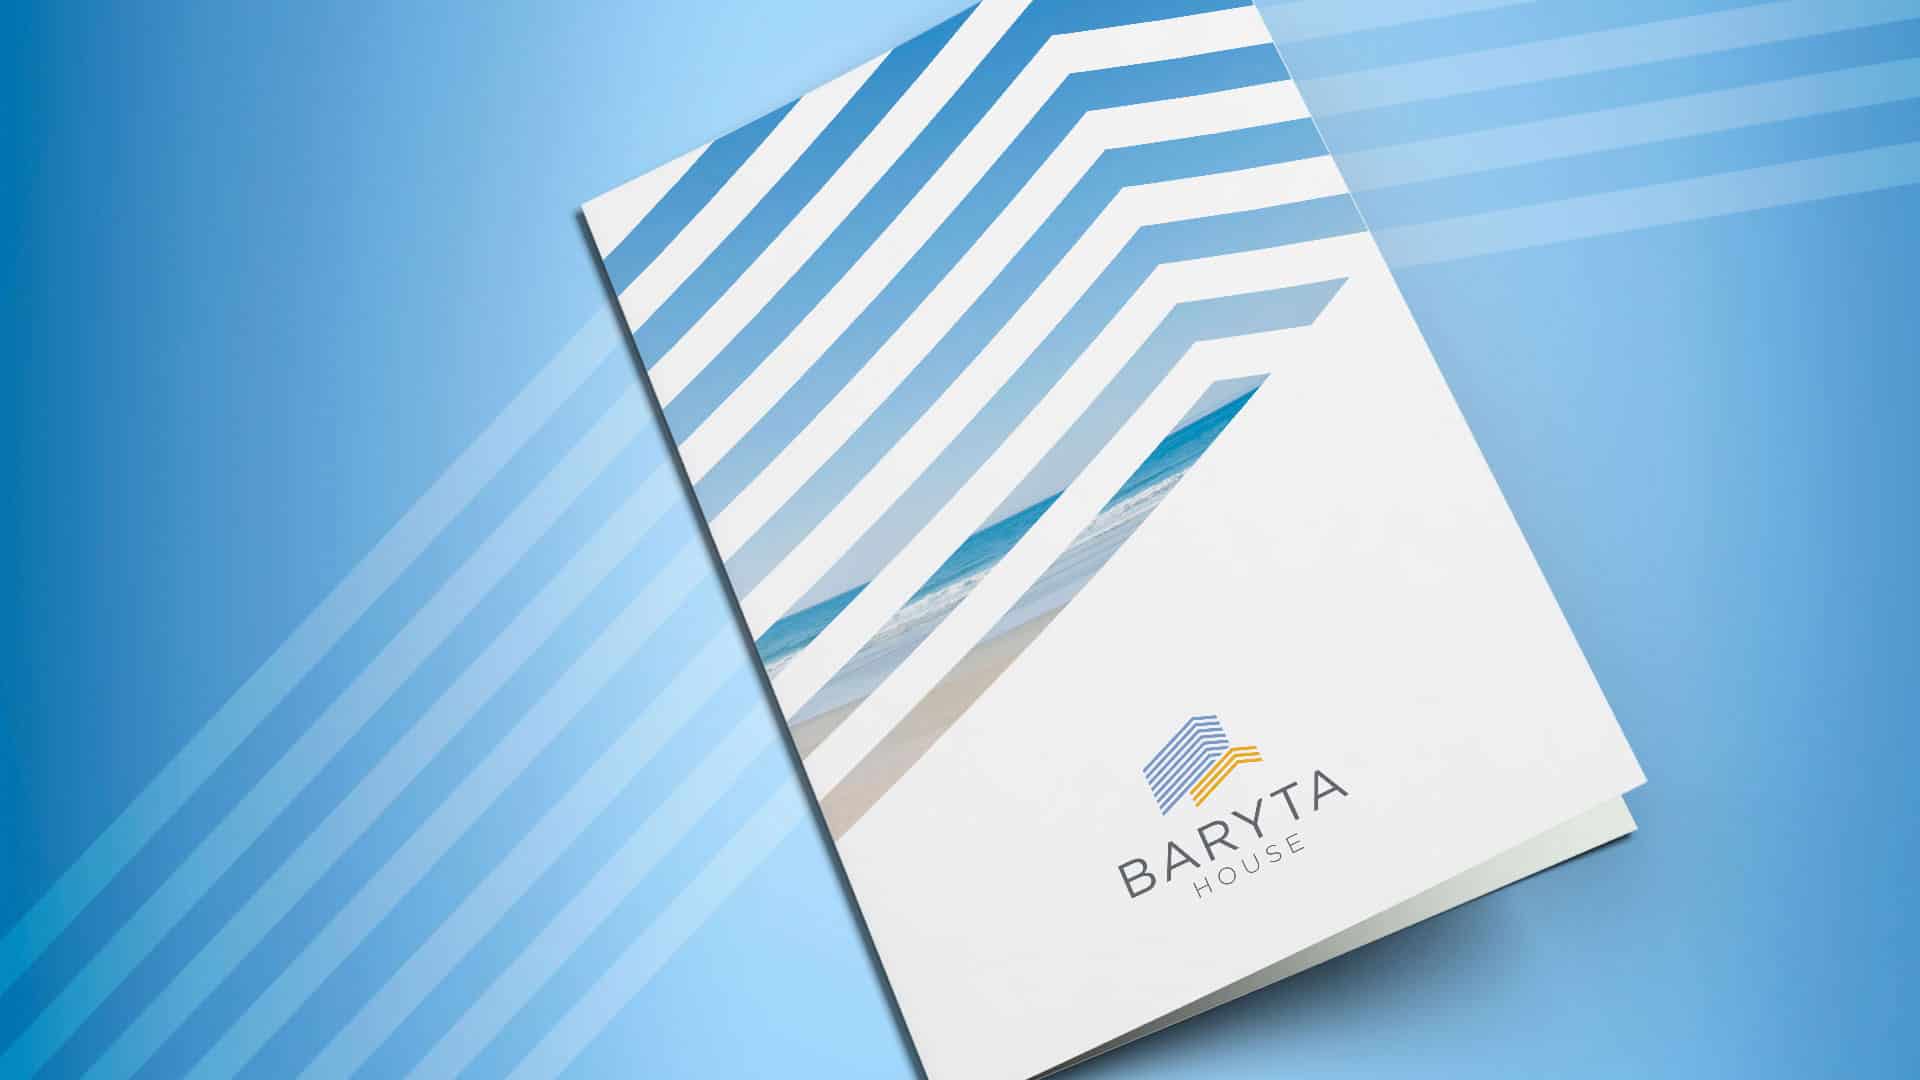 Baryta House branded sales brochure created by Essex design agency Swan Creative